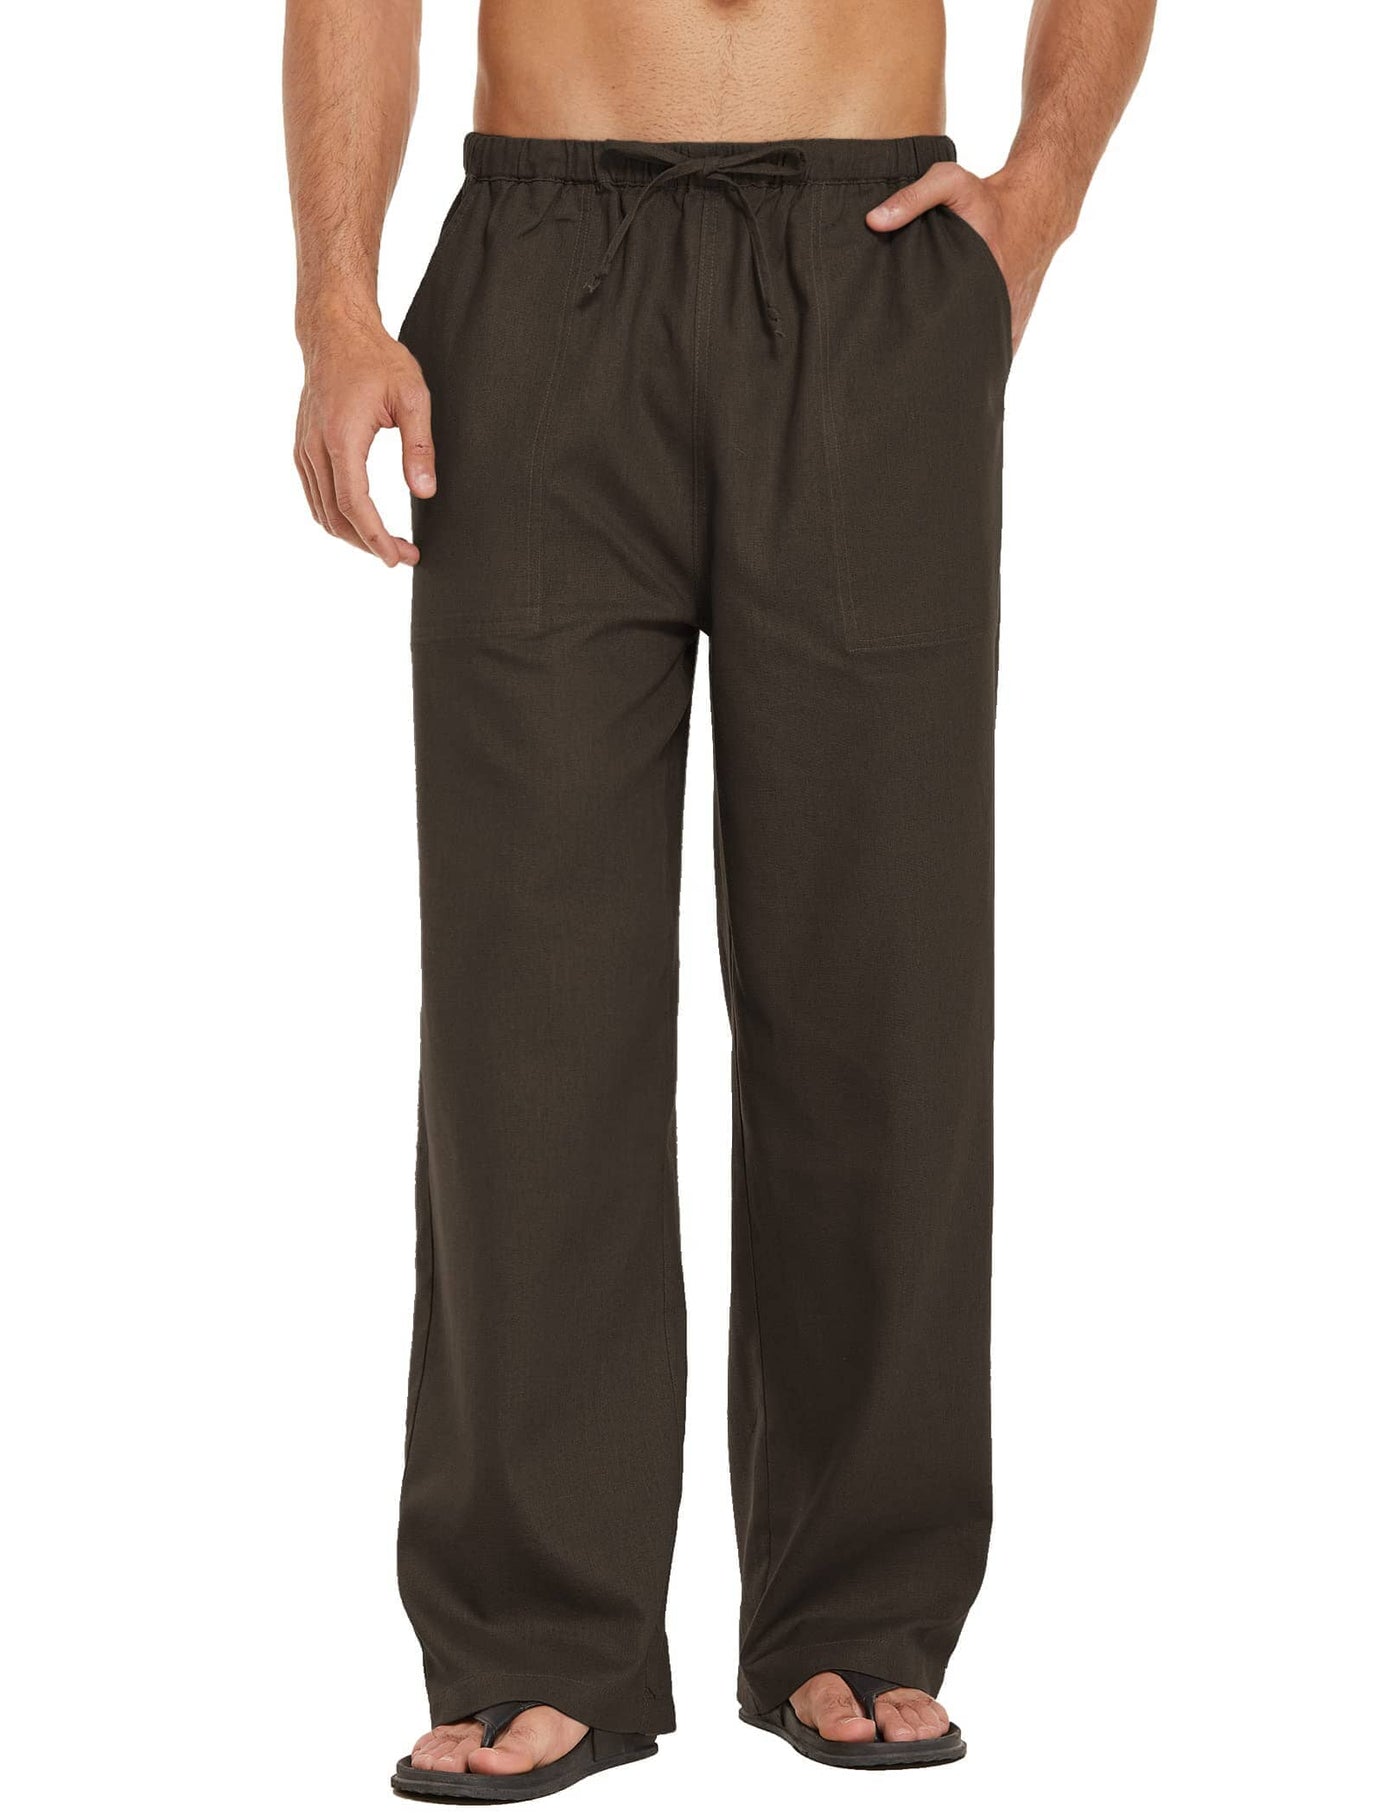 Coofandy Linen Style Loose Waist Yoga Pants (US Only) Pants coofandy Dark Brown S 